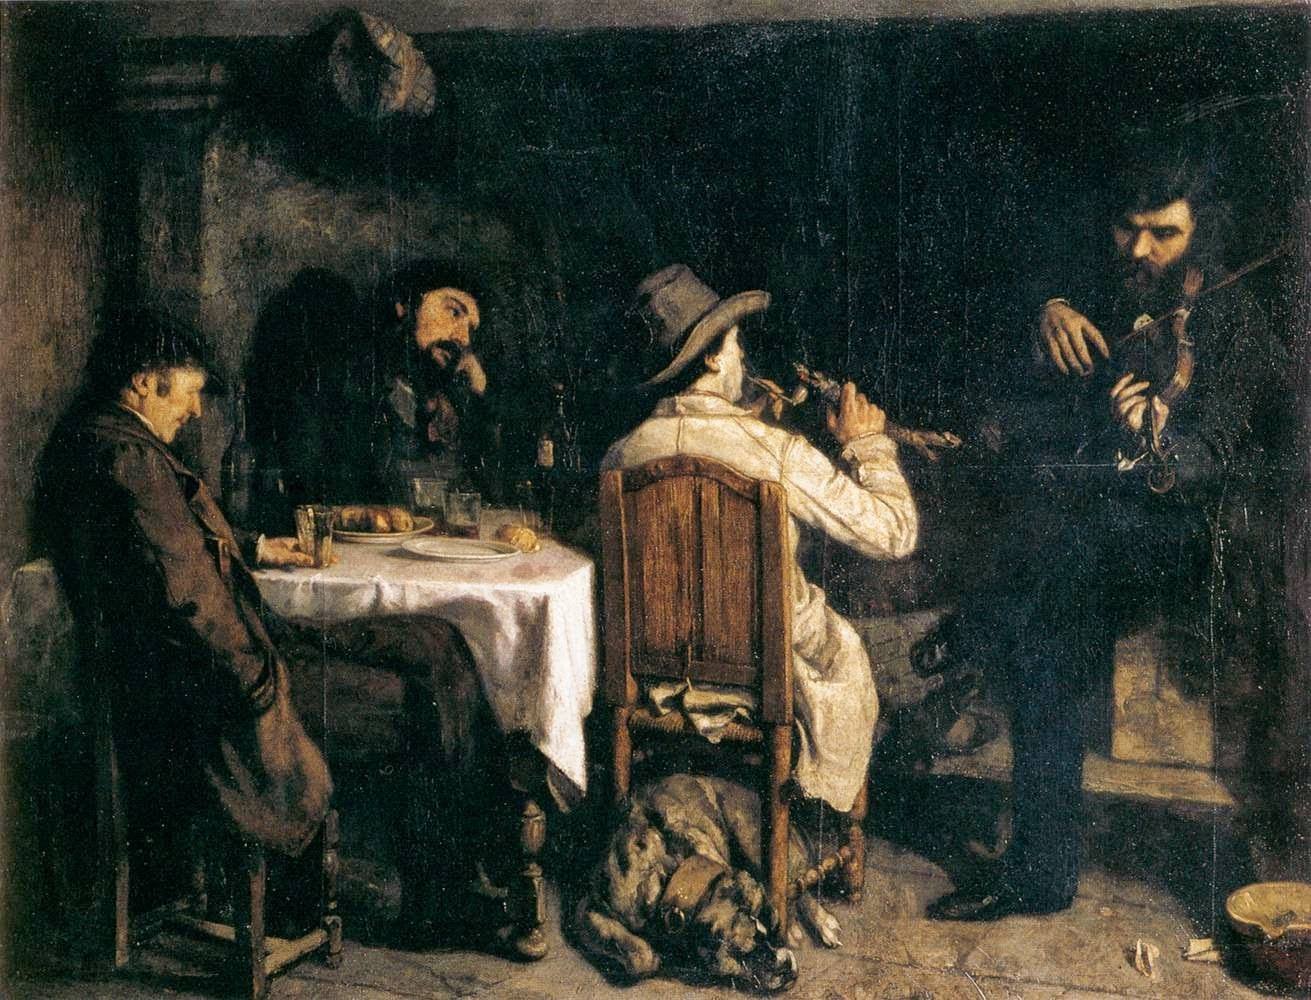 Chi era Gustave Courbet